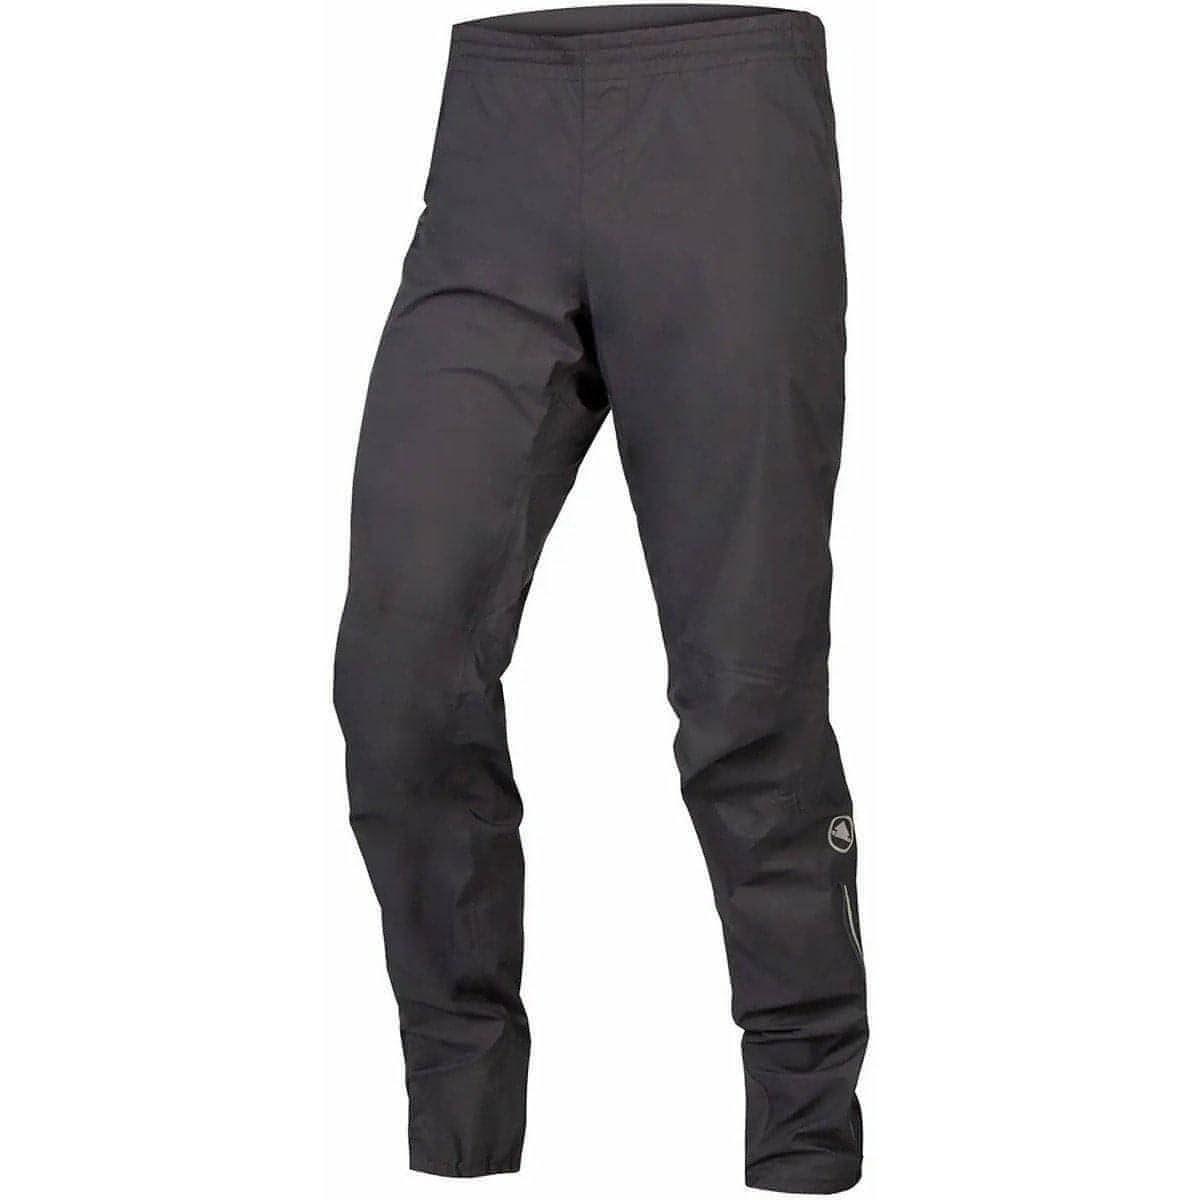 Endura GV500 Waterproof Mens Cycling Trousers - Grey 5056286909020 - Start Fitness